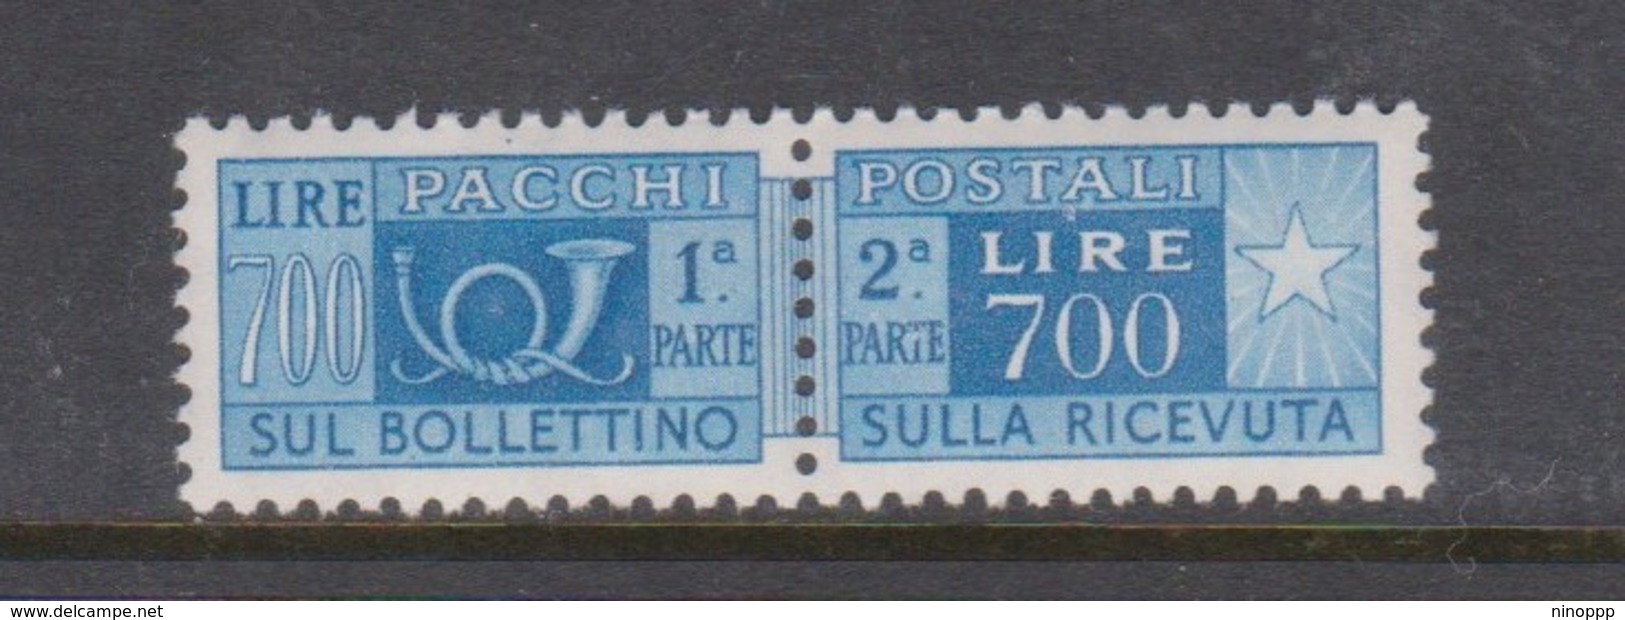 Italy PP 100 1955-79 Parcel Post 700 Lire Azur,mint  Never Hinged - Postal Parcels